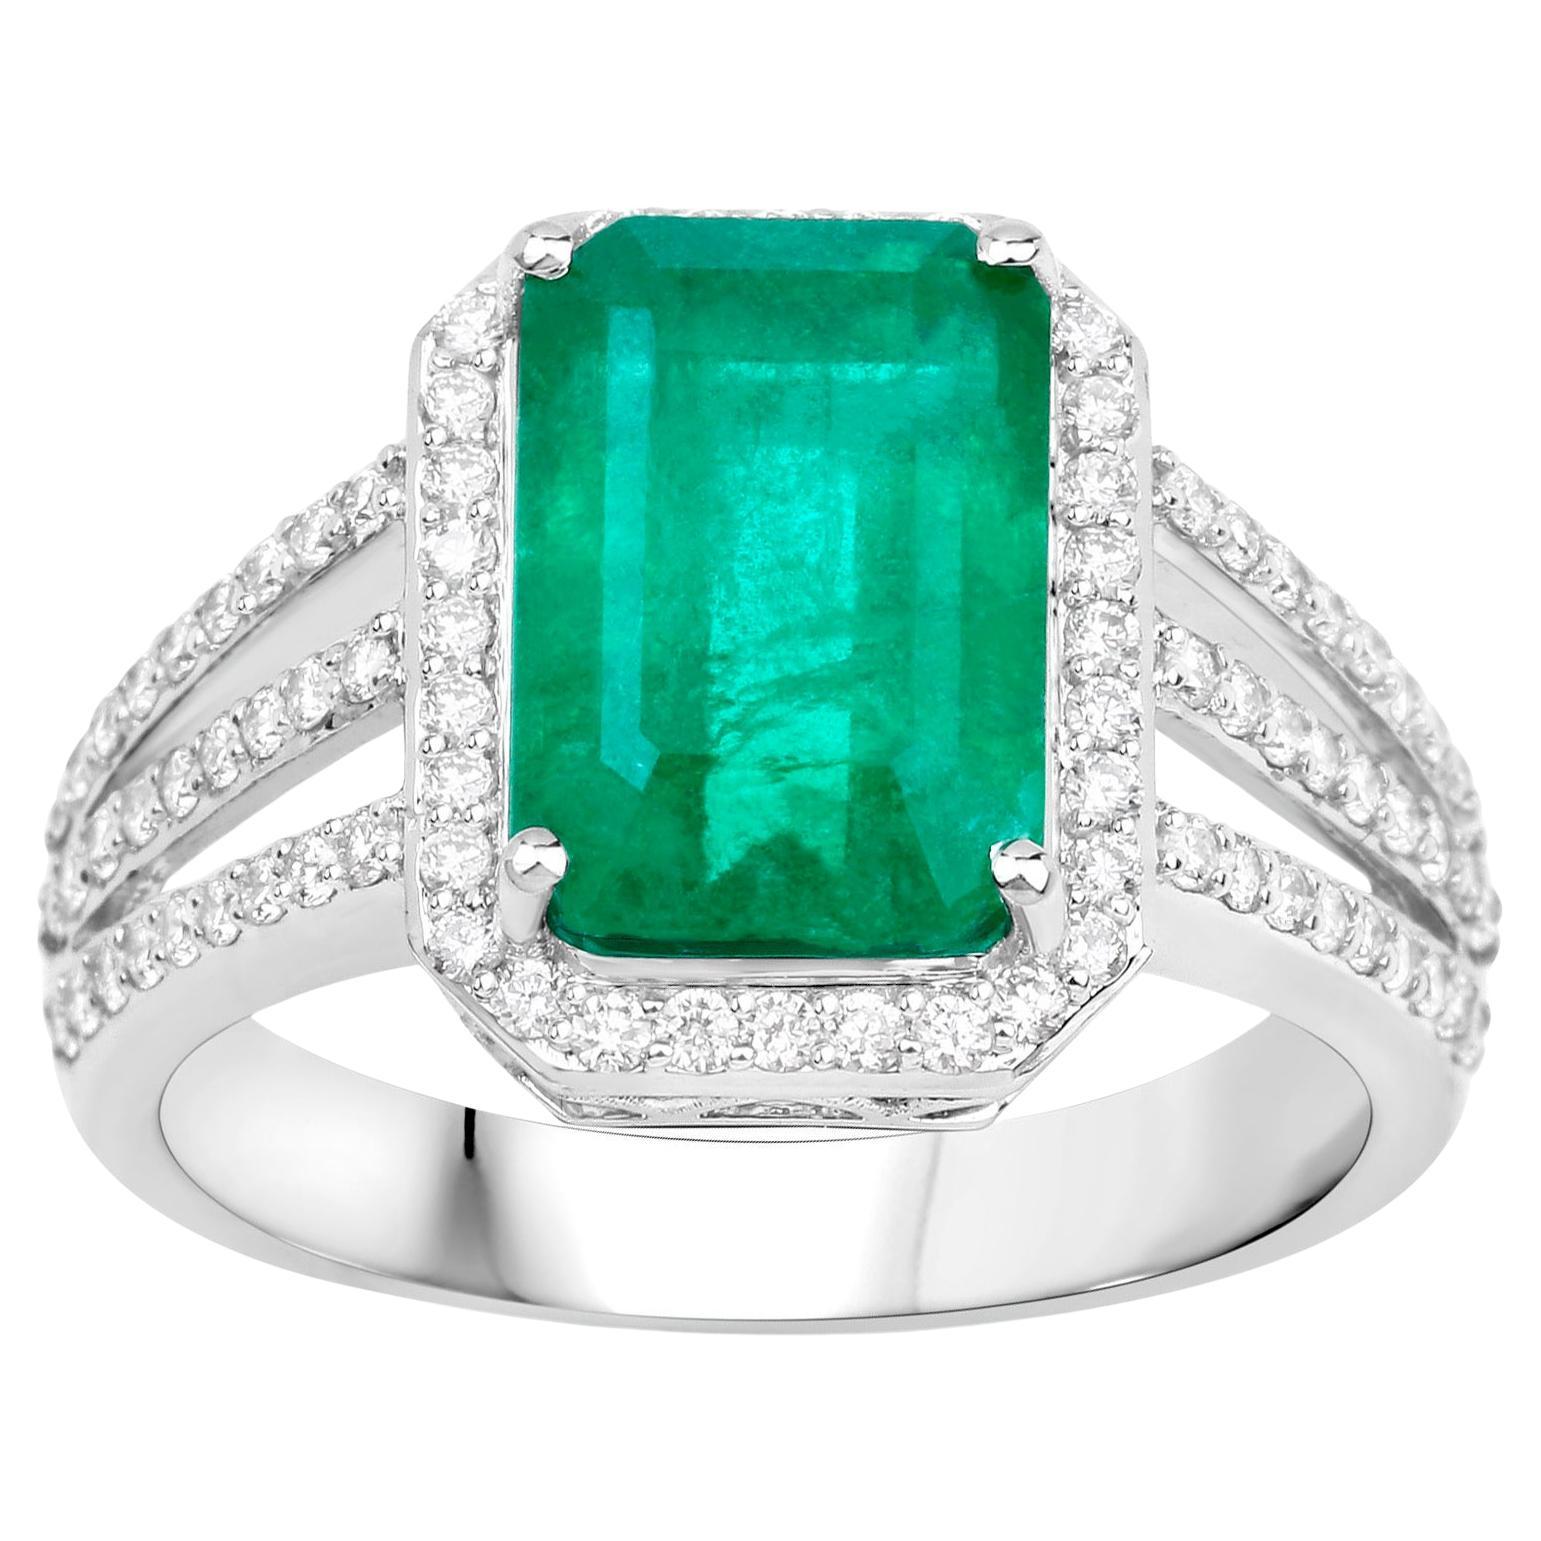 IGI Certified Zambian Emerald Ring With Diamonds 4.61 Carats 14K White Gold